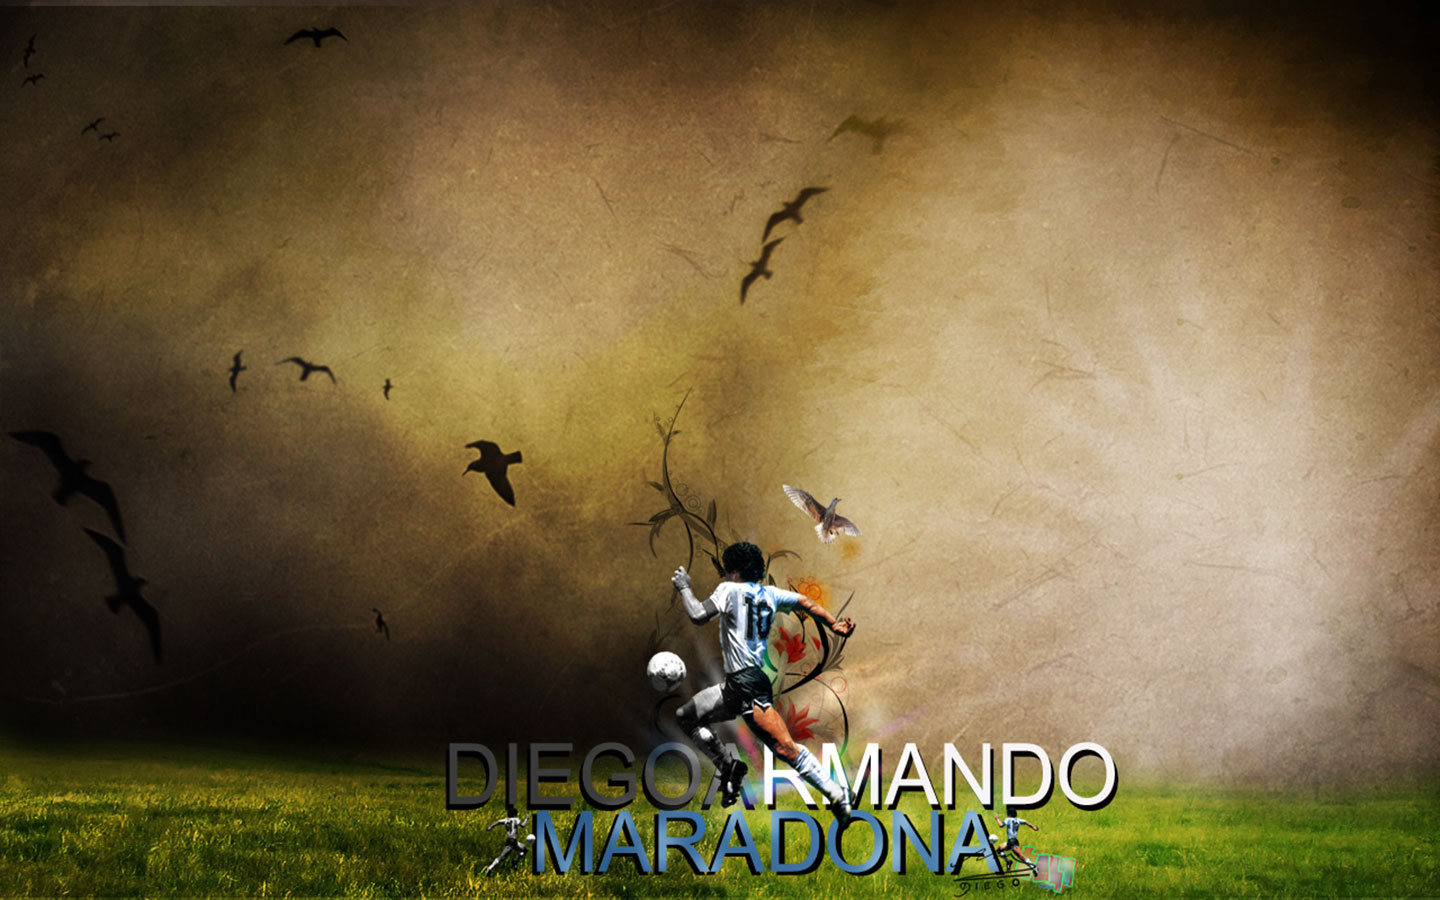 Diego Armando Maradona Picture